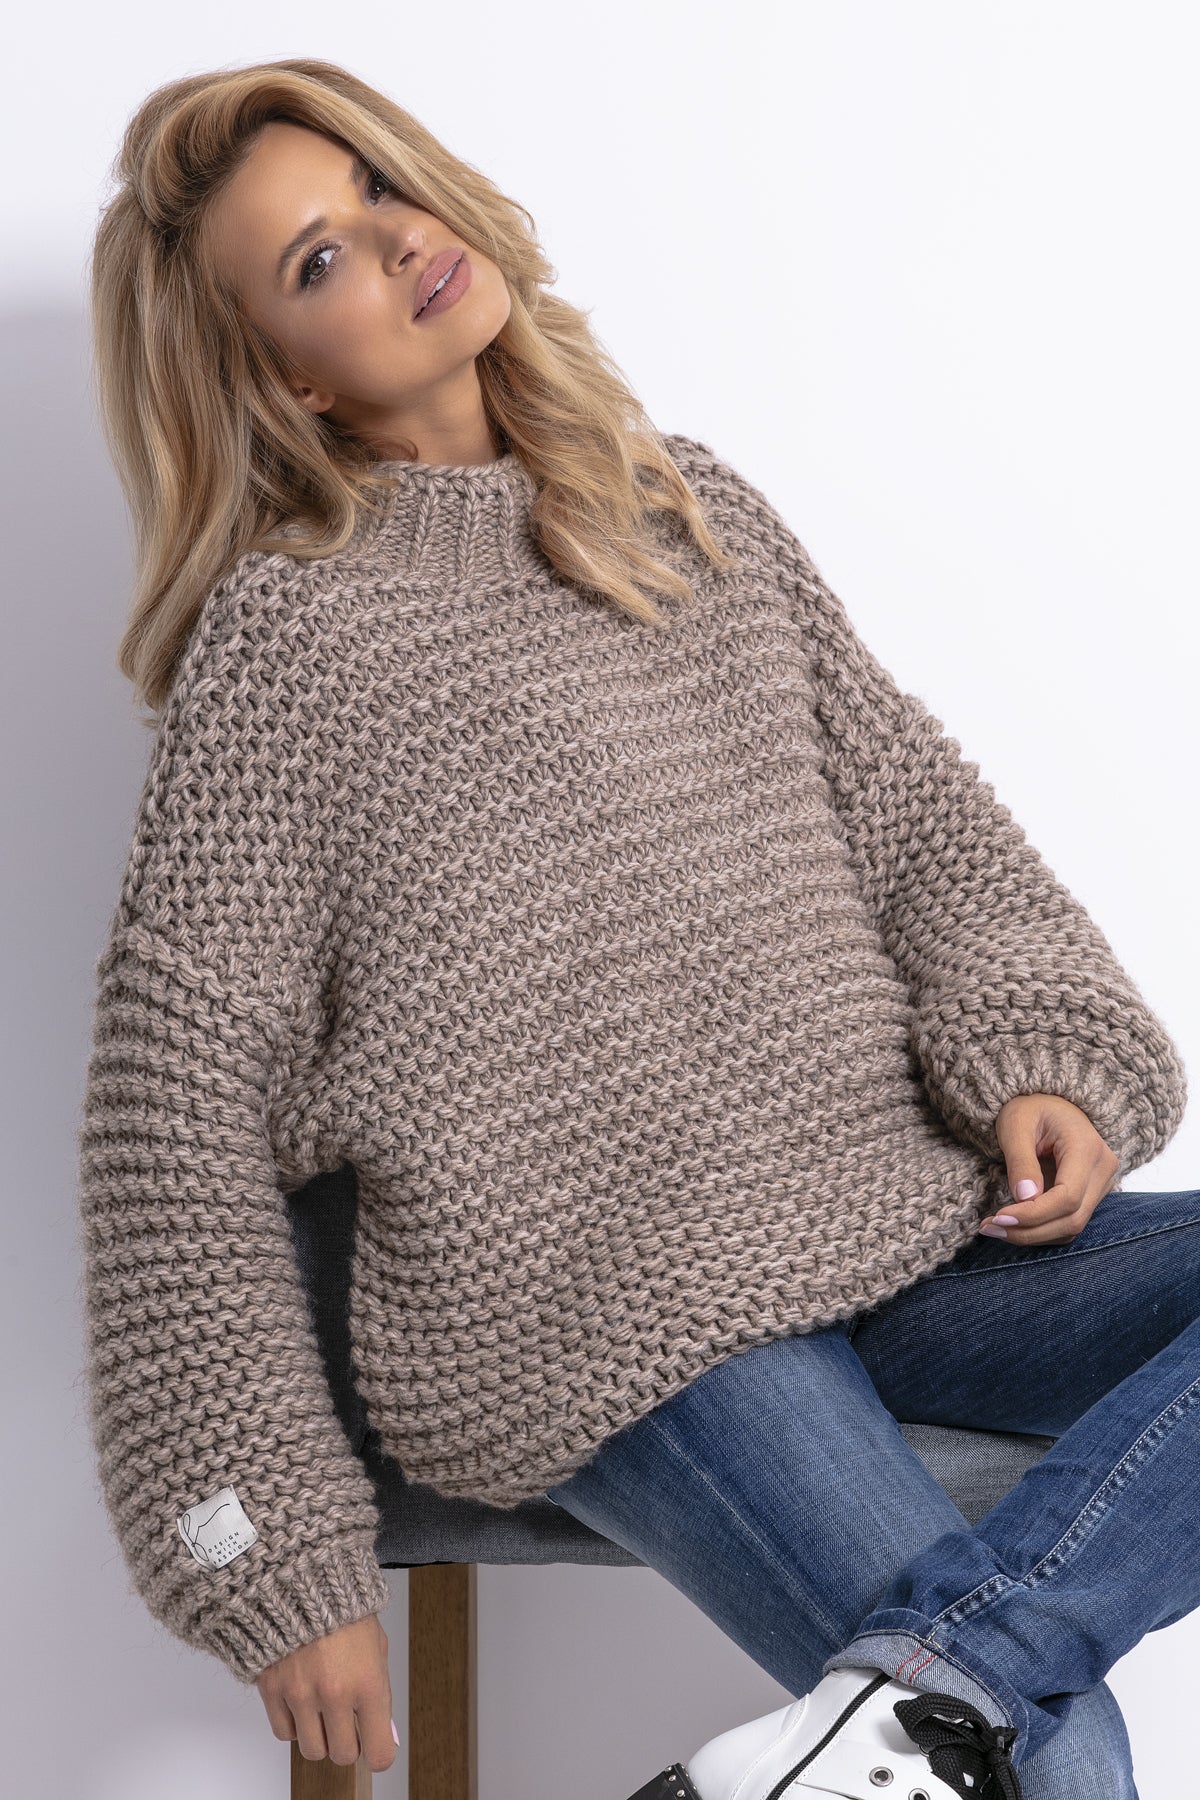 Oversize chunky knit sweater